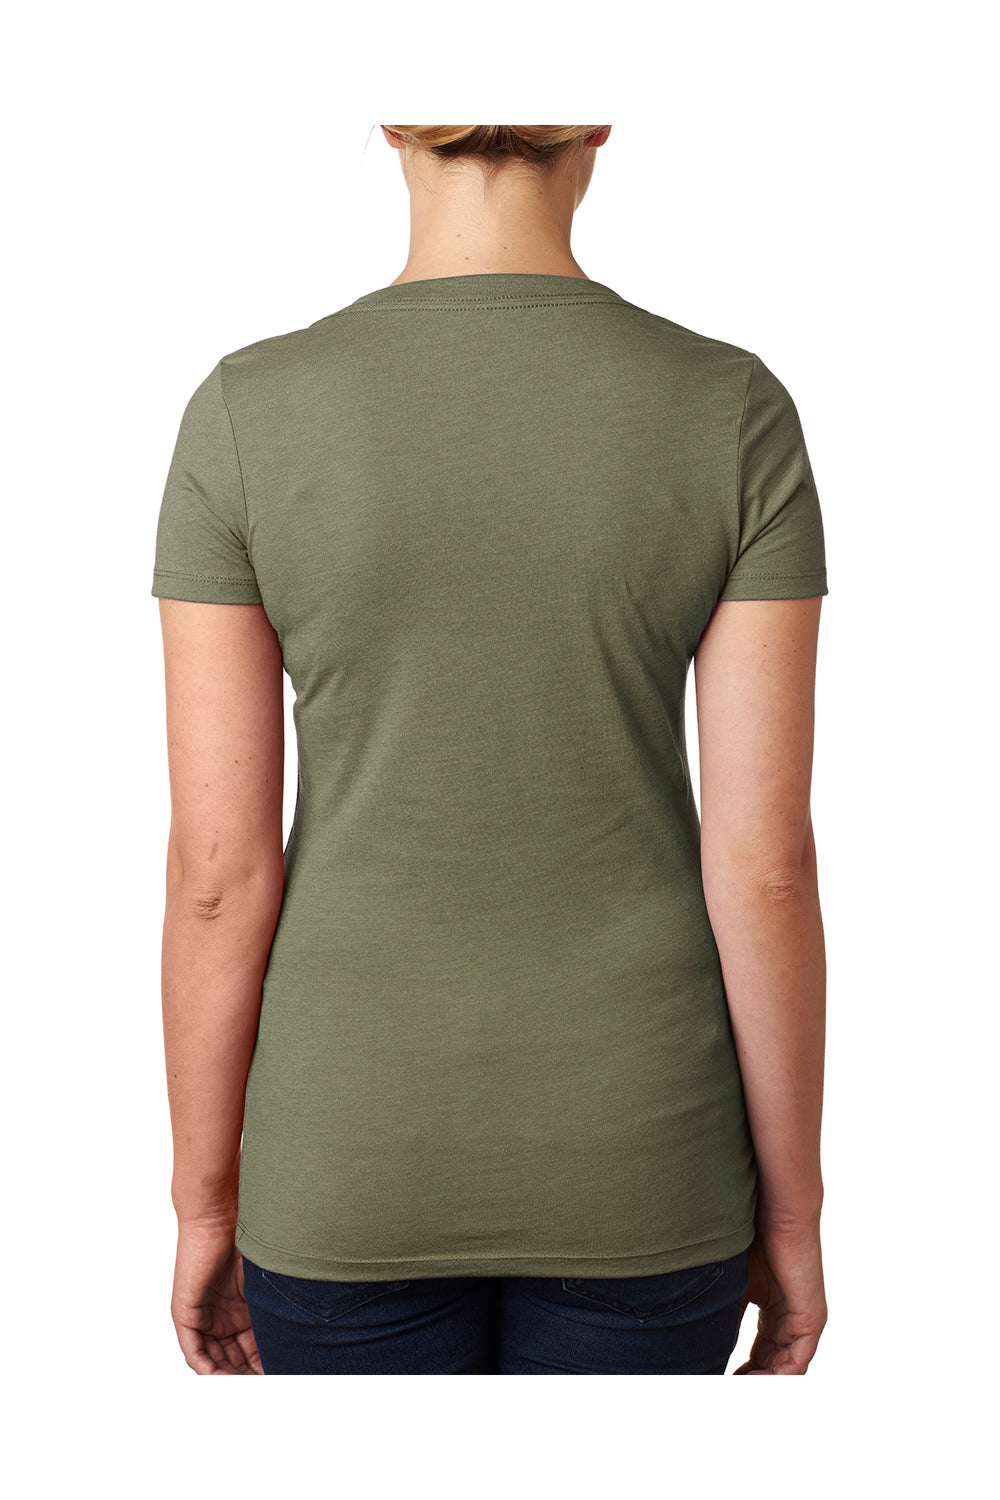 Next Level 6640 Womens CVC Jersey Short Sleeve V-Neck T-Shirt Military Green Back